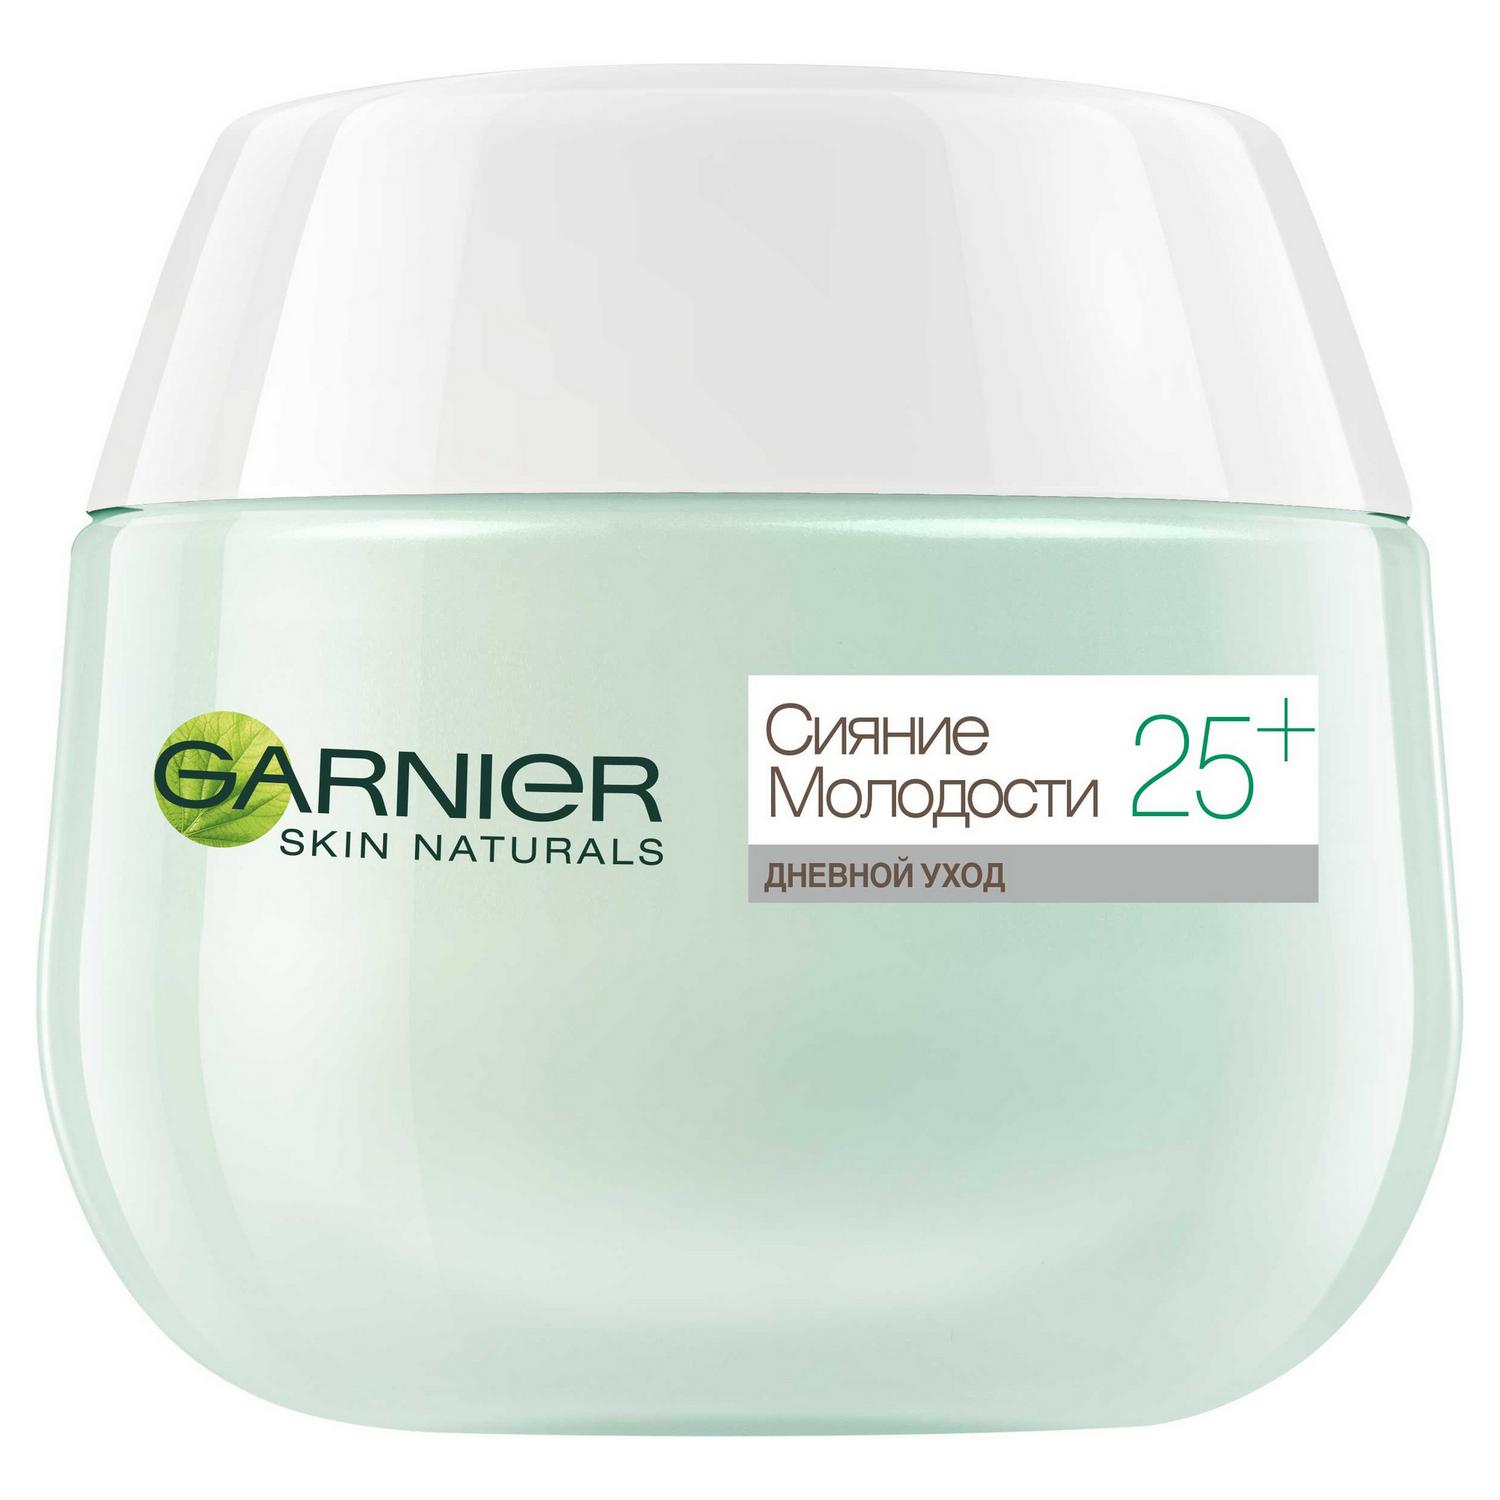 Крем для лица Garnier Skin Naturals Сияние Молодости 25+ дневной уход 50 мл, размер 8x6,6x6,6 см C4929500/6 - фото 4